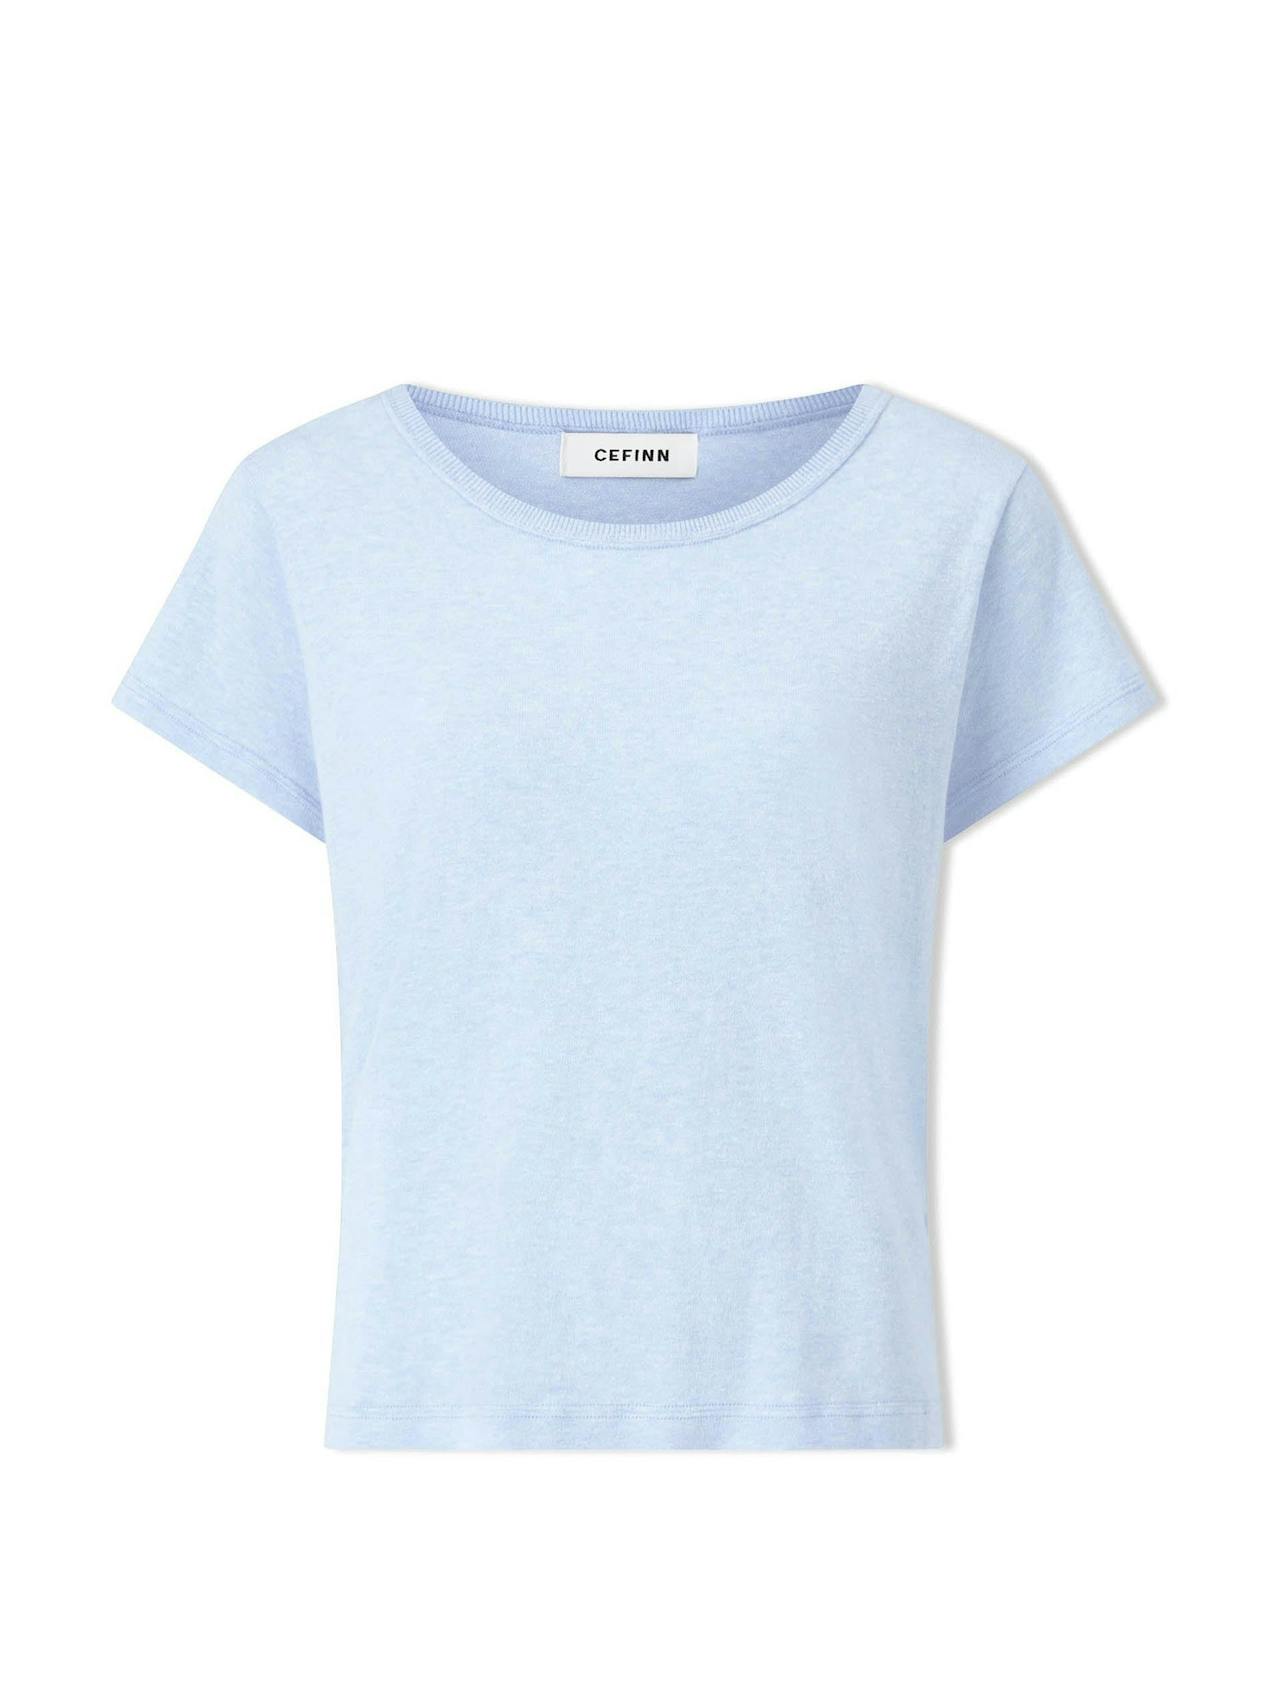 Pale blue Madison linen blend round neck knit t-shirt